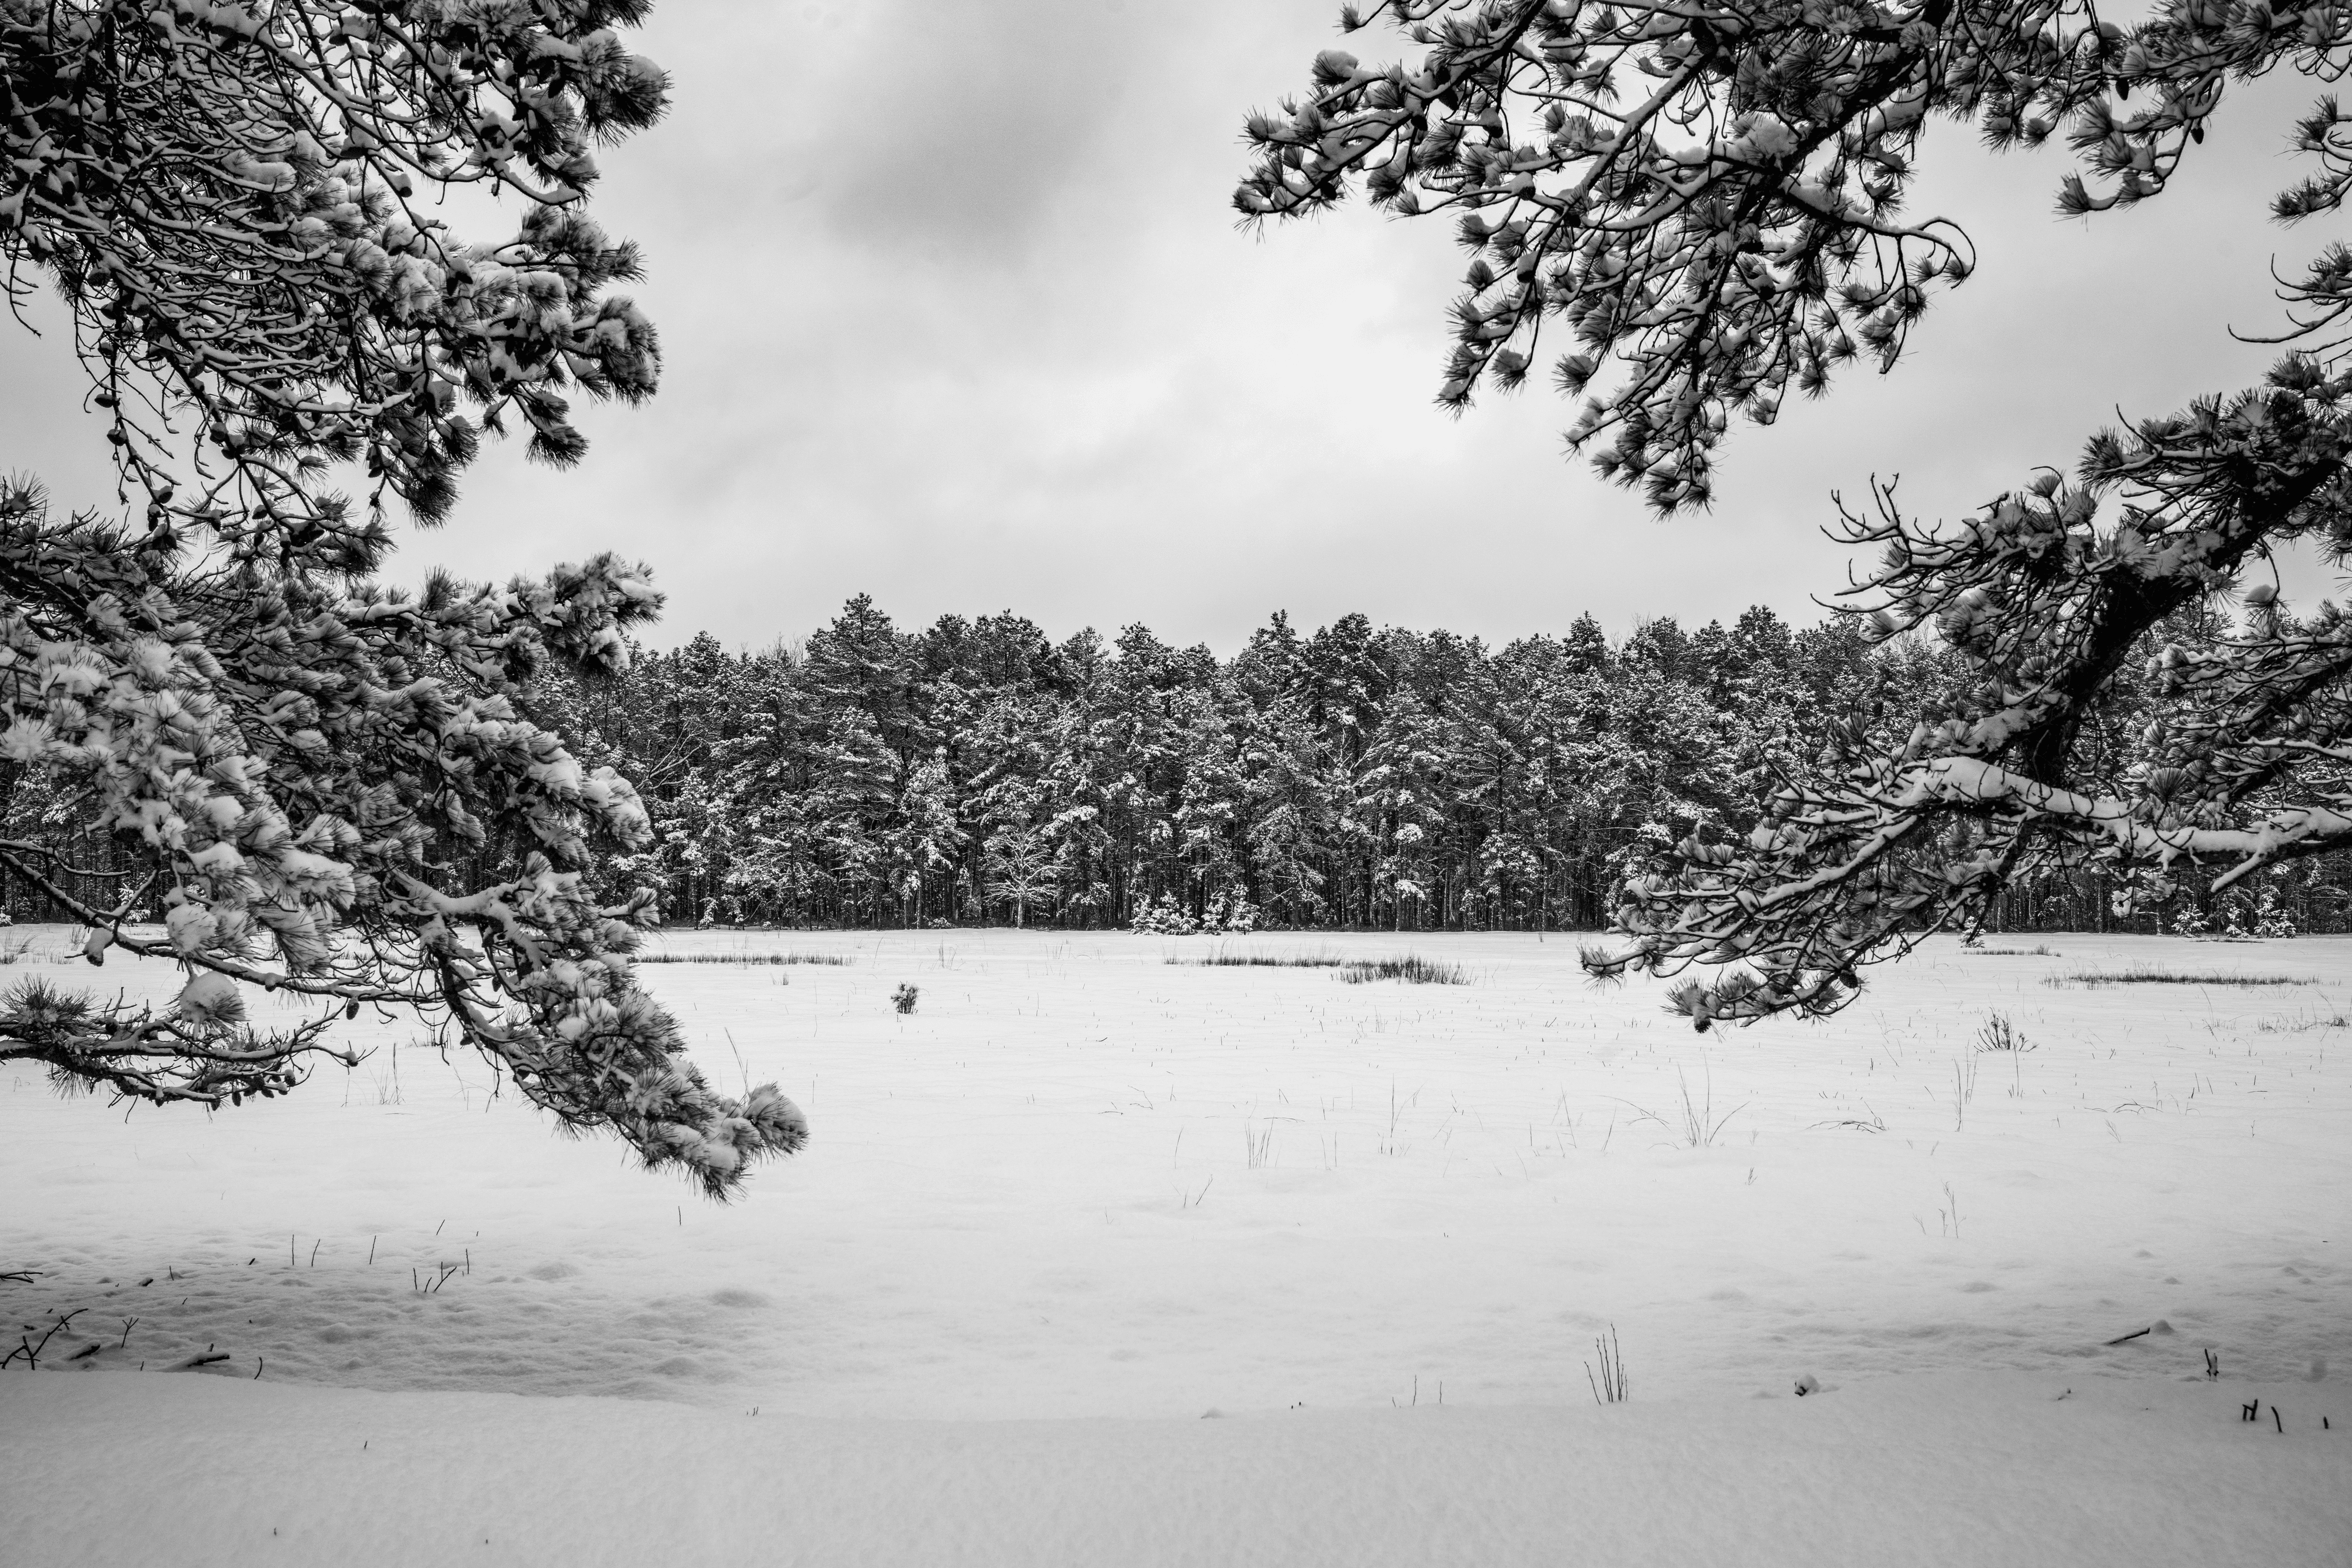 Snowy Frozen Lake in New Jersey by Dennis Maida